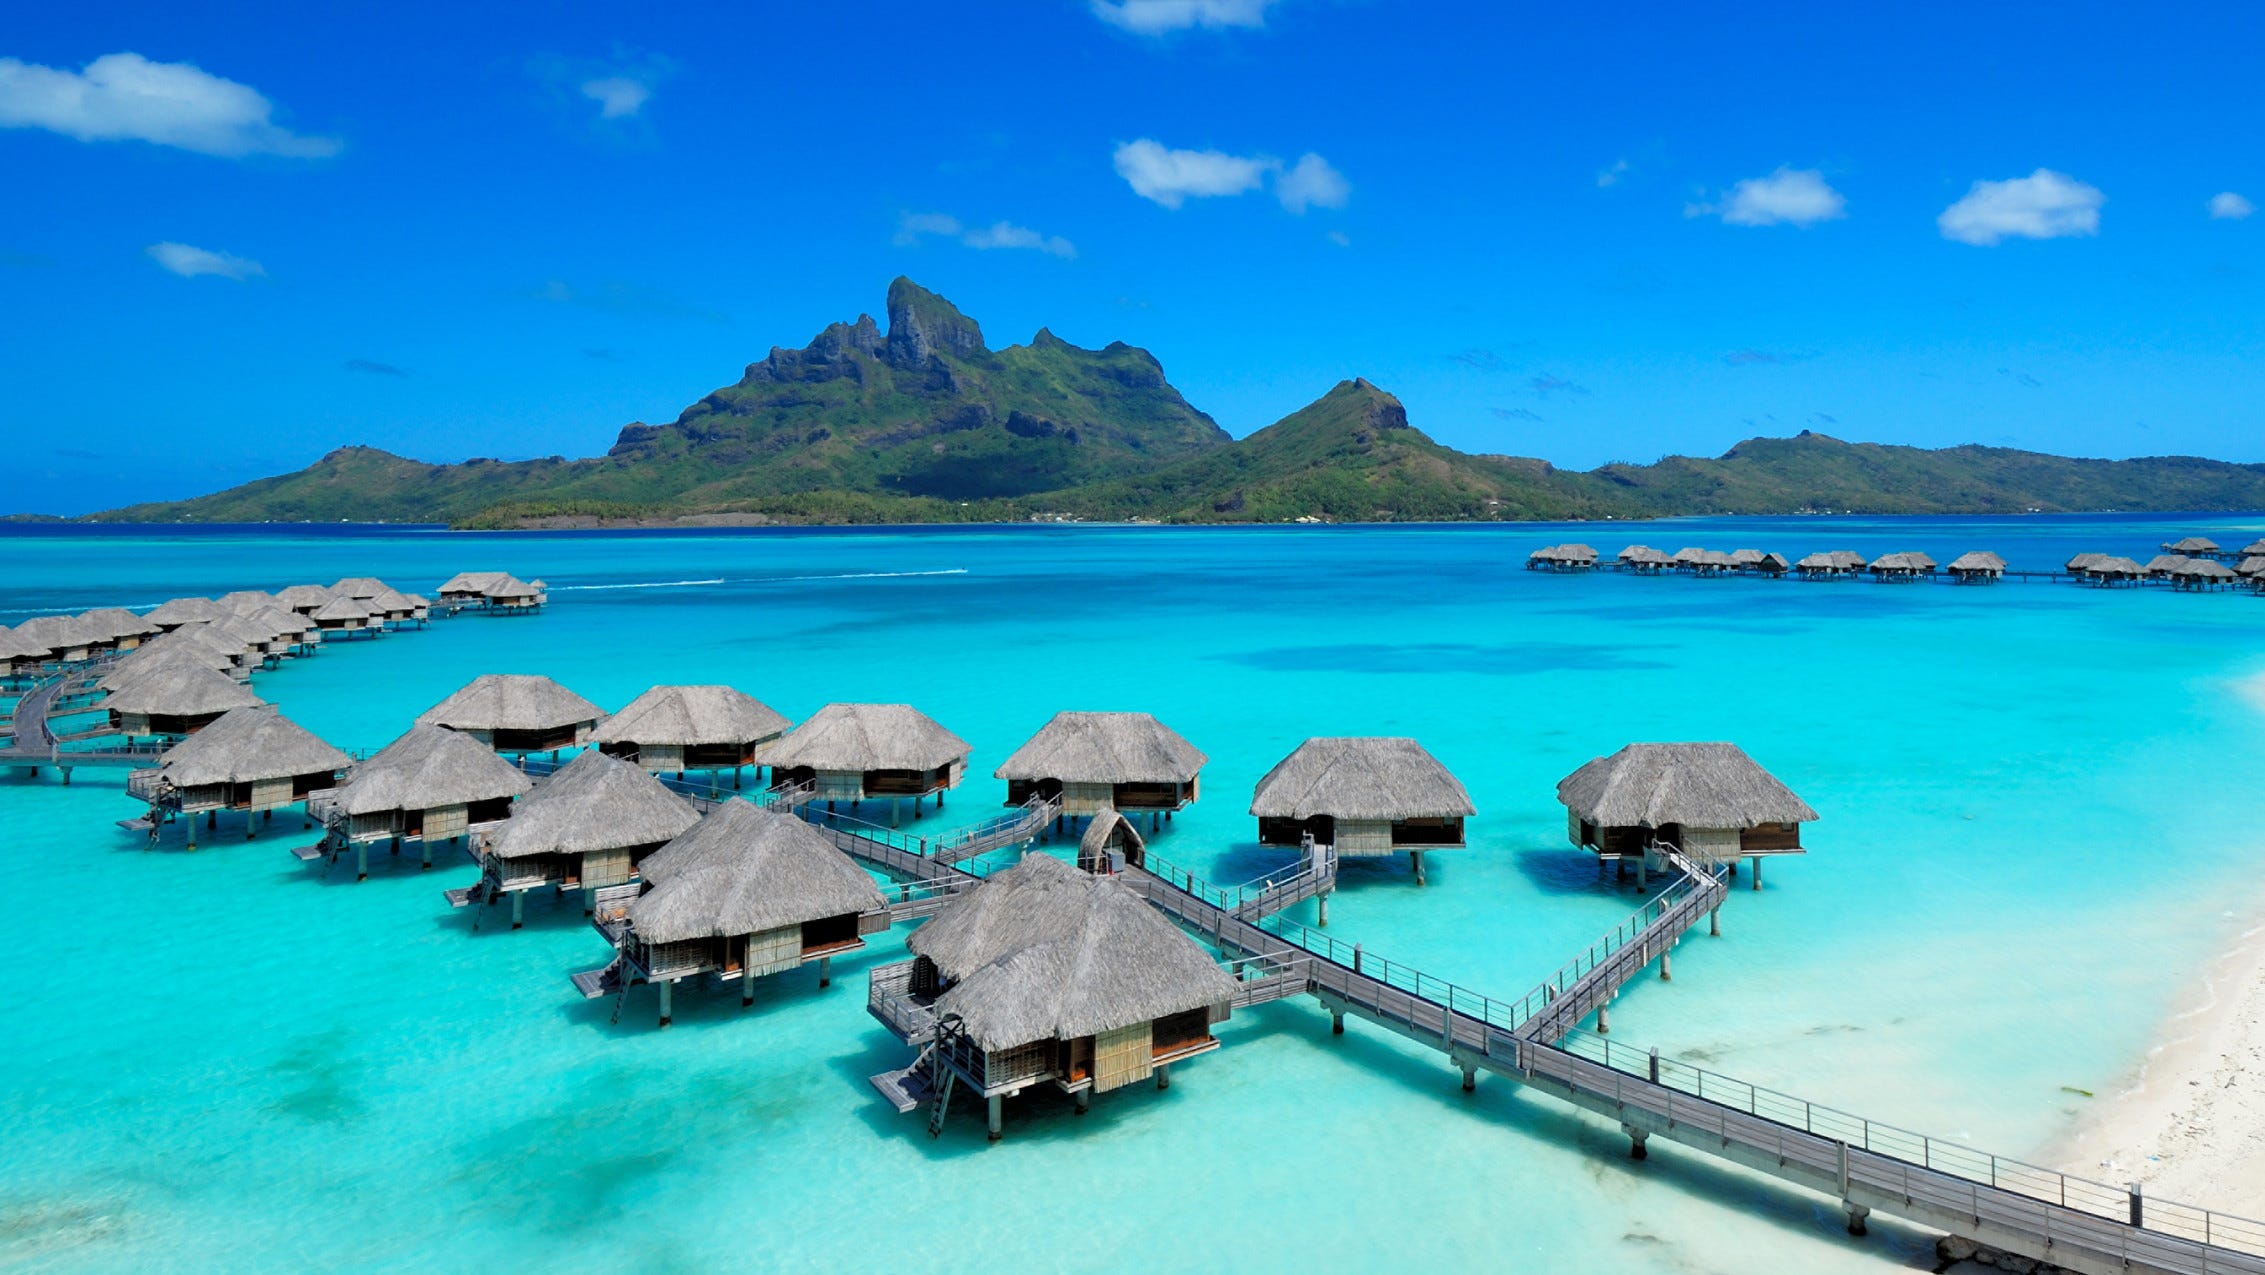 Glatte eftertænksom sikring Family travel: Why Bora Bora belongs on your family's bucket list